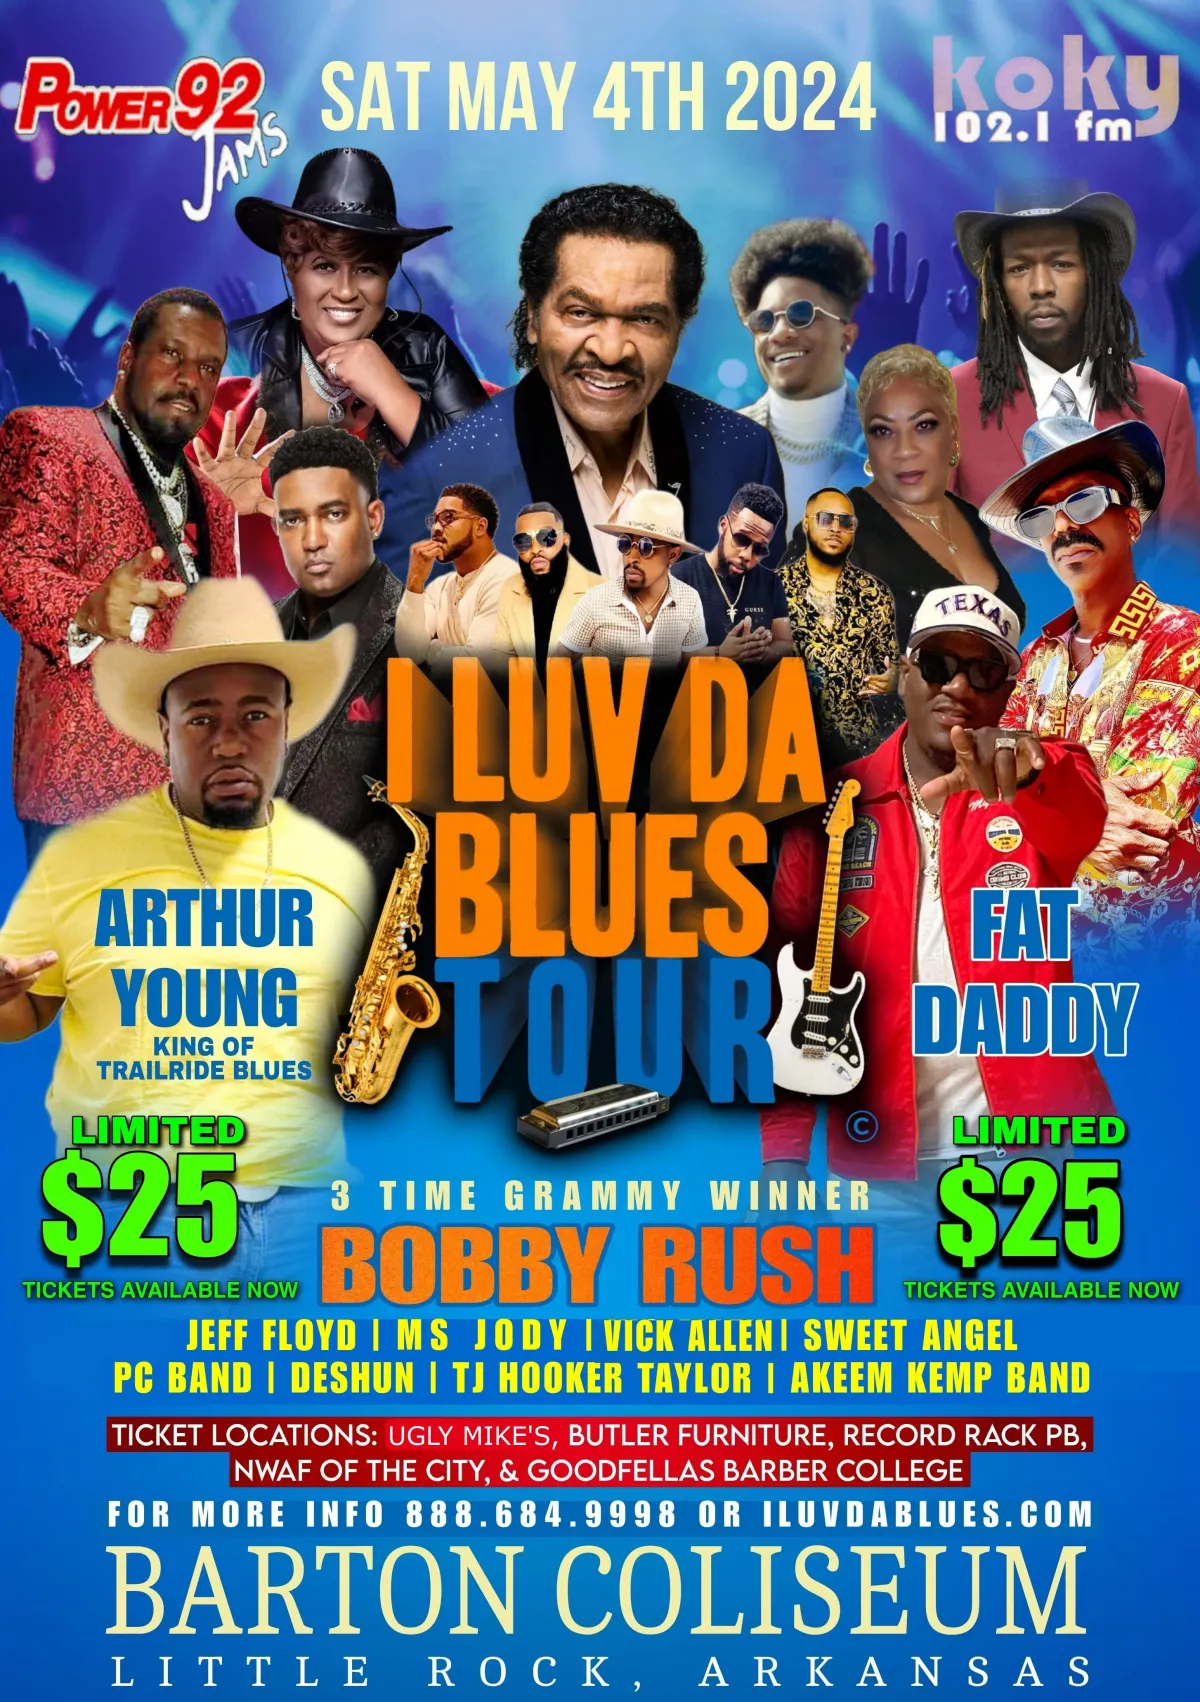 I Luv Da Blues Tour 2024